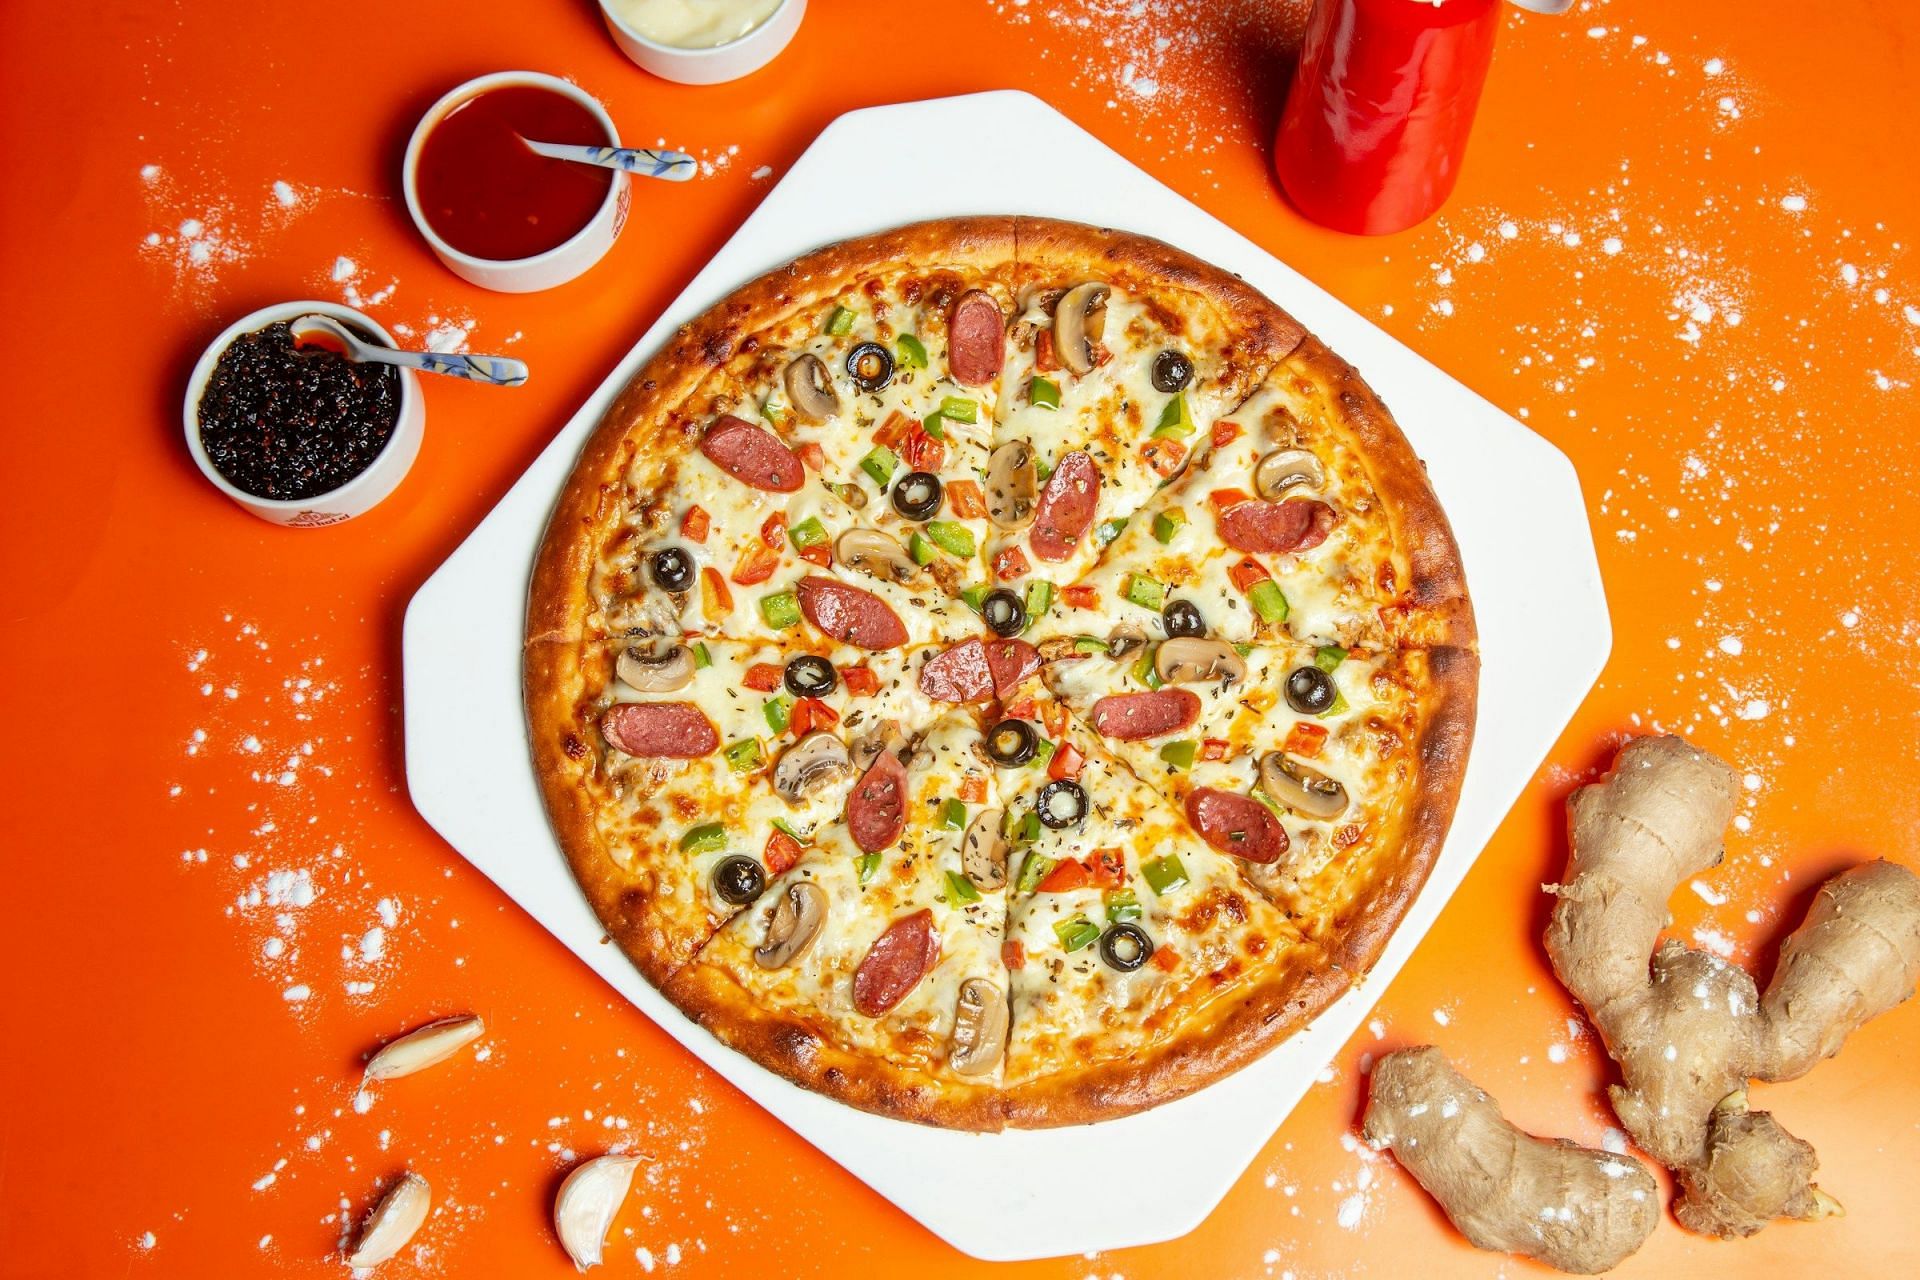 Pizza comes under high-sodium foods (Image by Shourav Shekh/Unsplash)